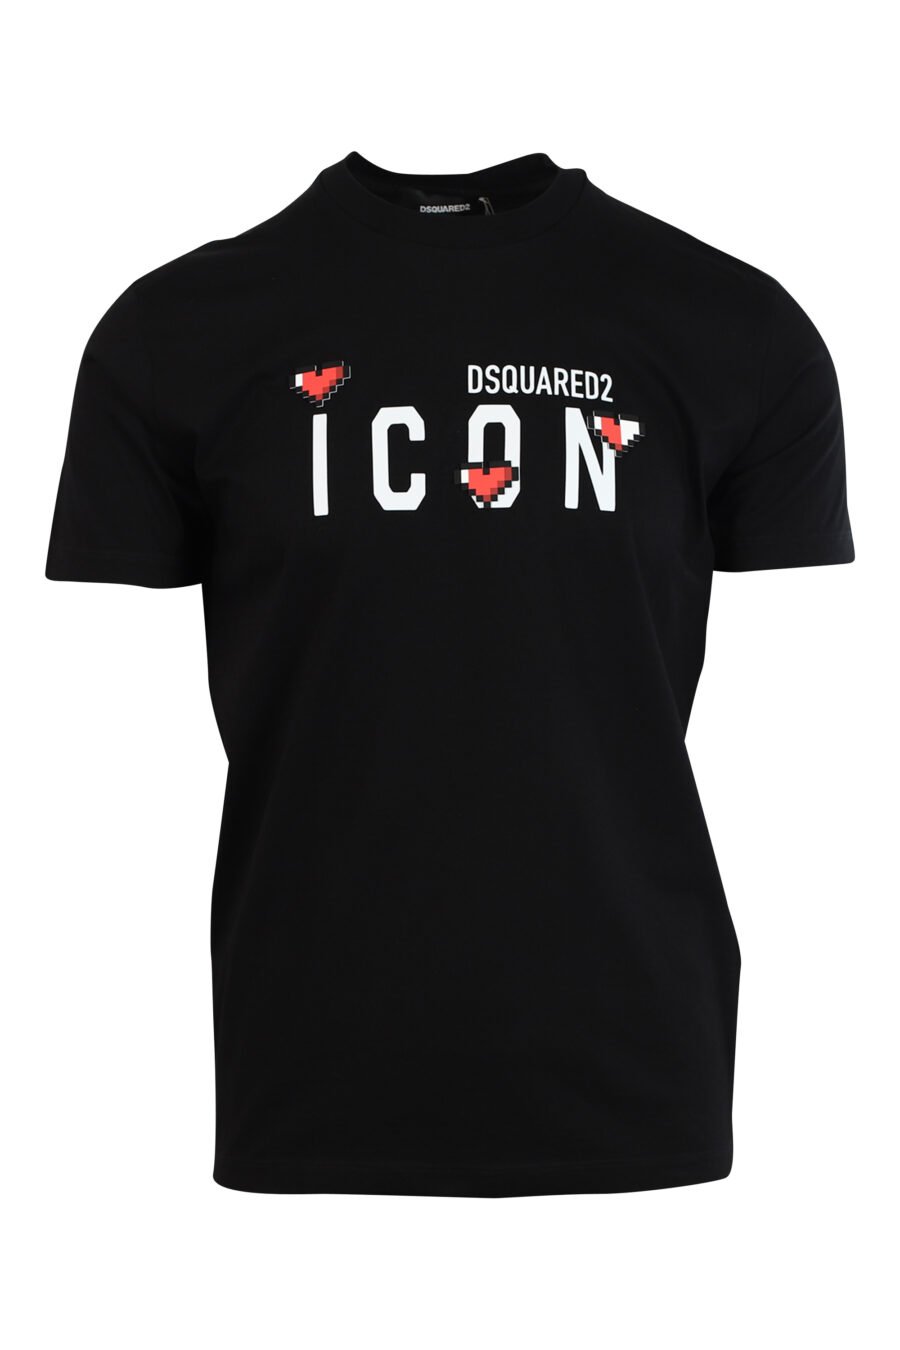 Schwarzes T-Shirt mit Maxilogo "Icon Herz Pixel" - 8052134980910